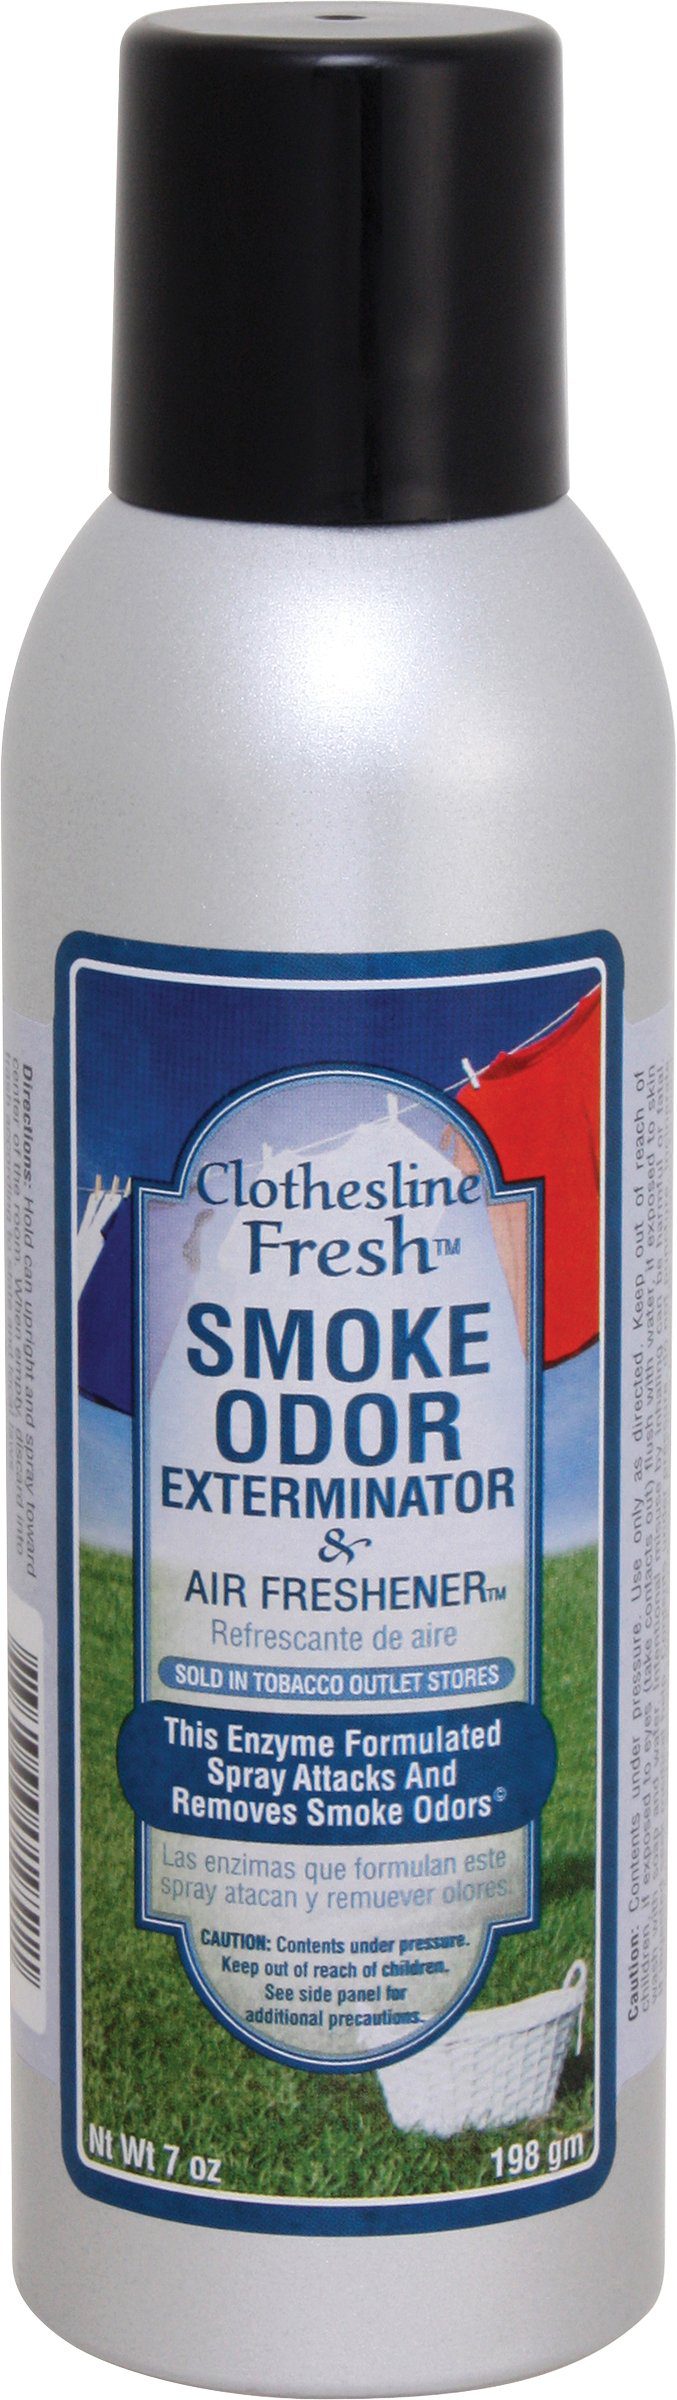 smoke odor exterminator spray bottle clothesline fresh